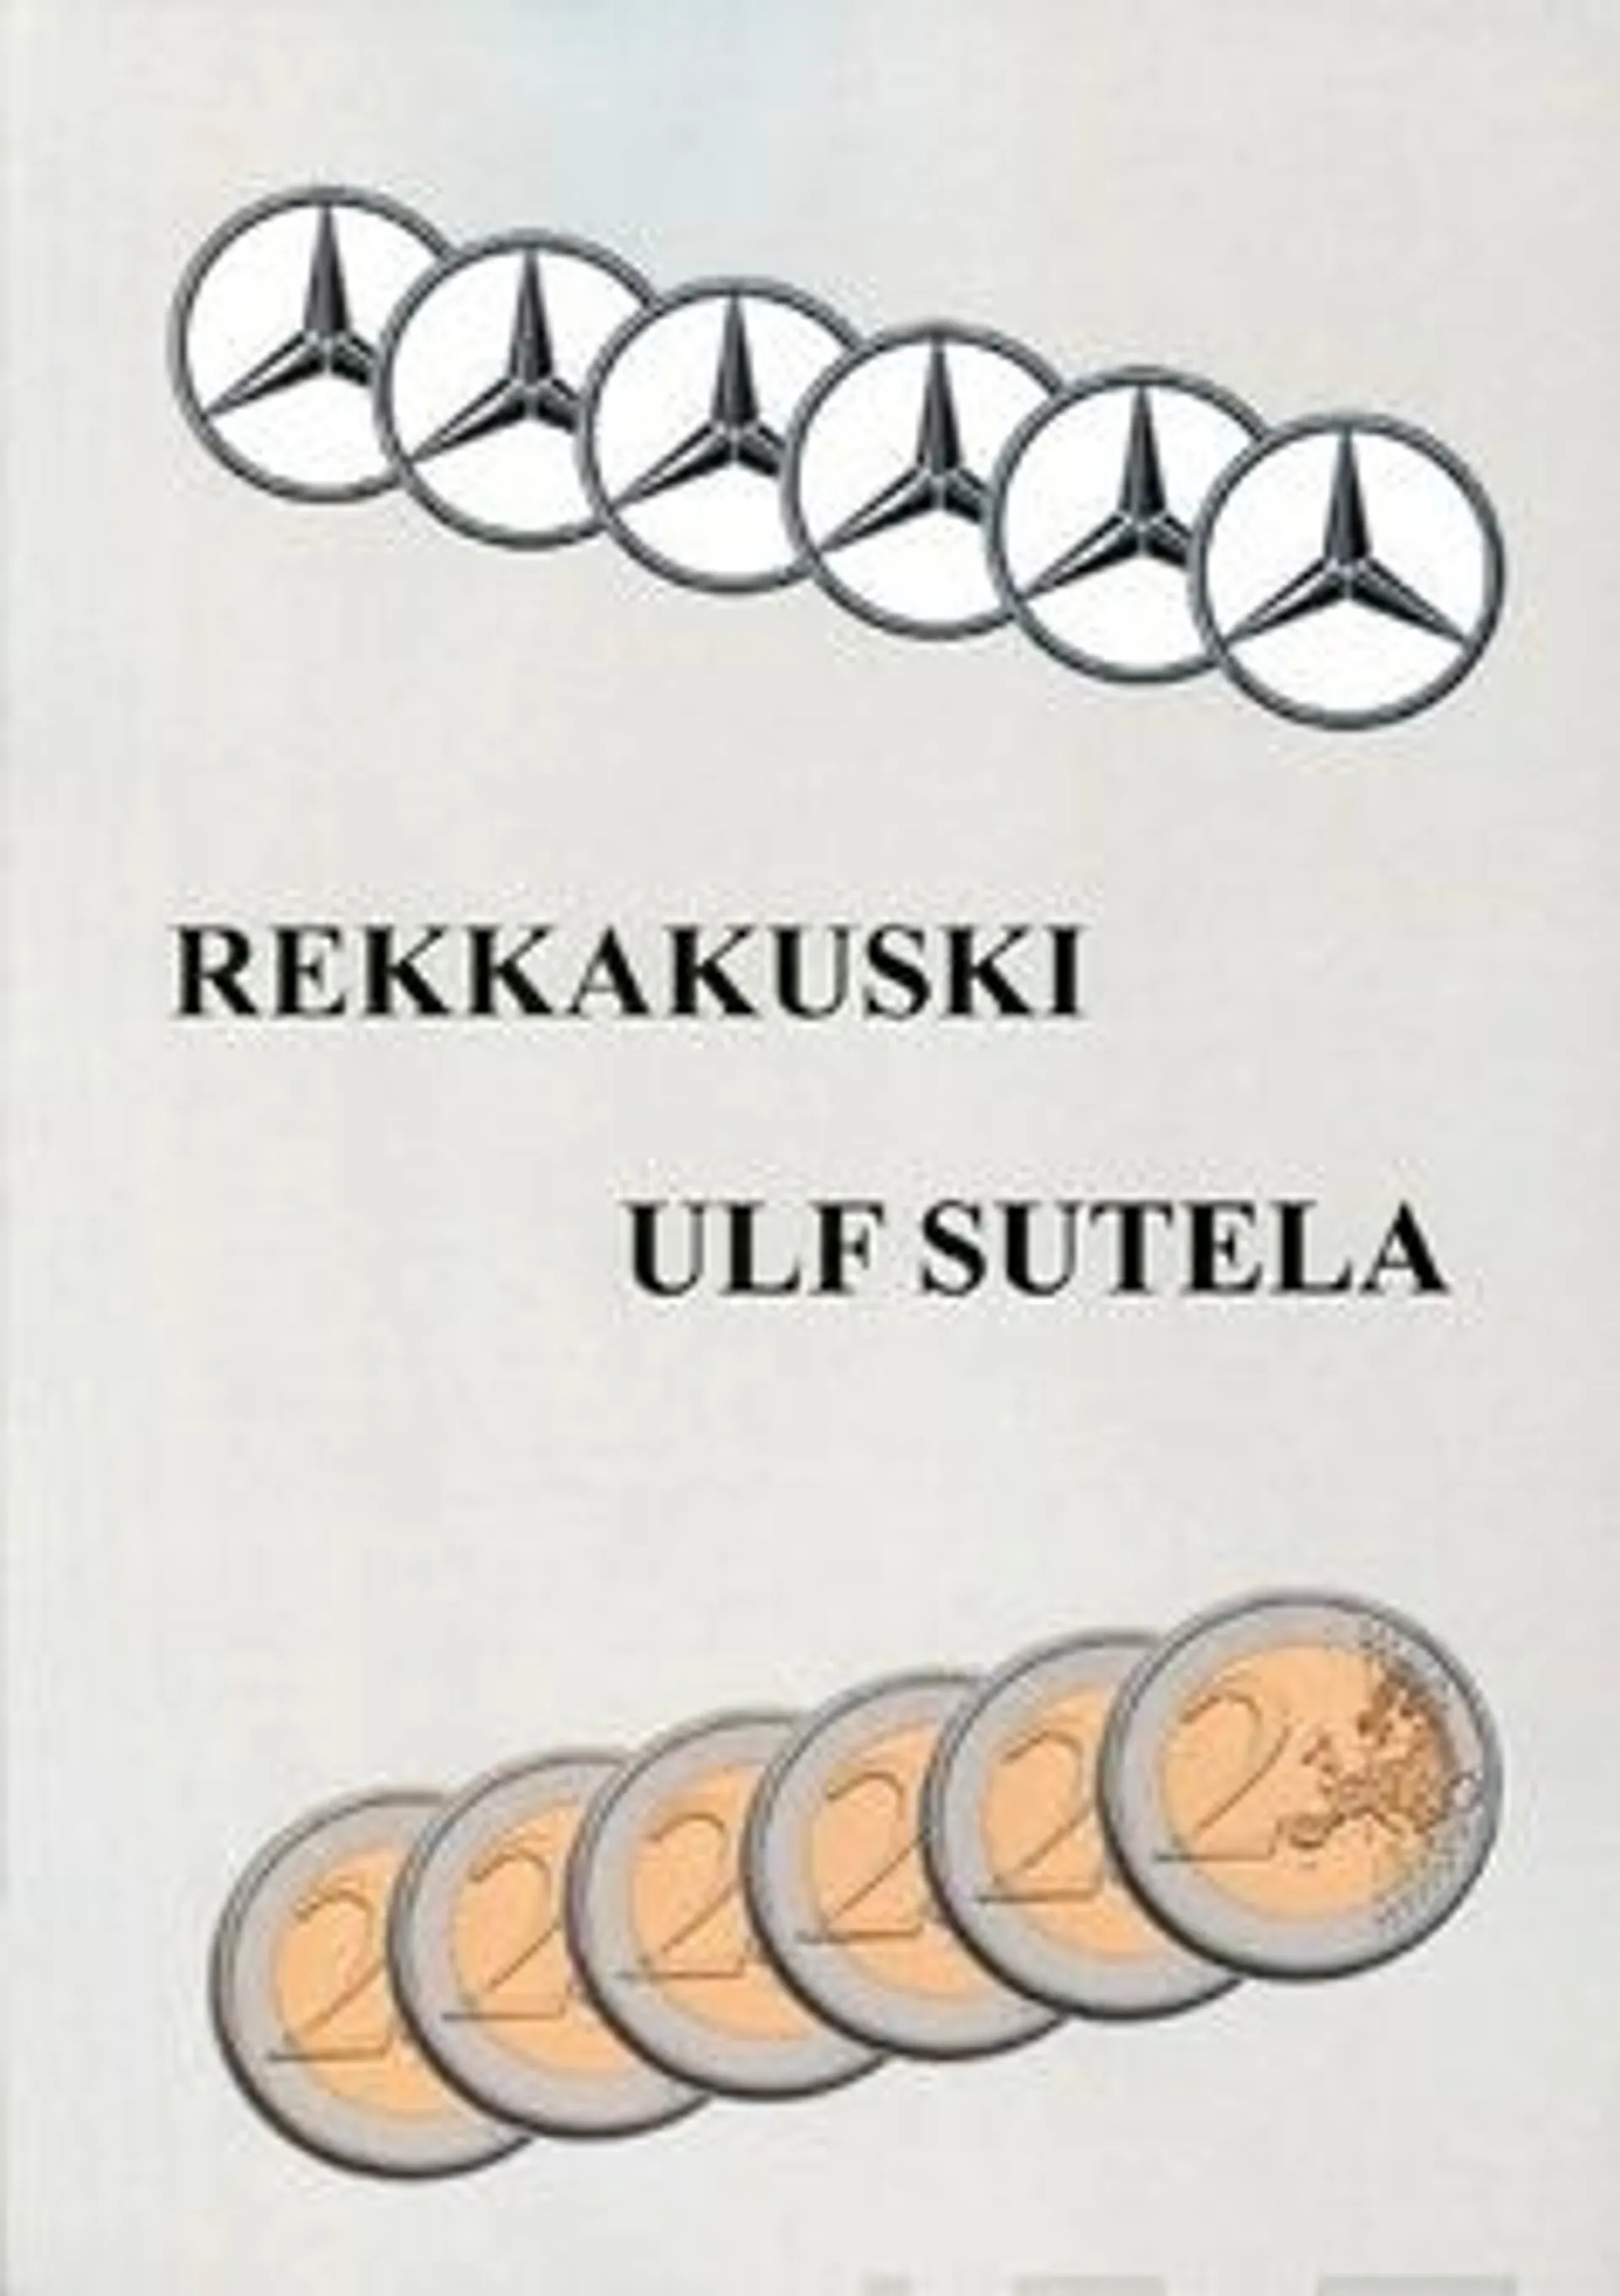 Kujala, Rekkakuski Ulf Sutela